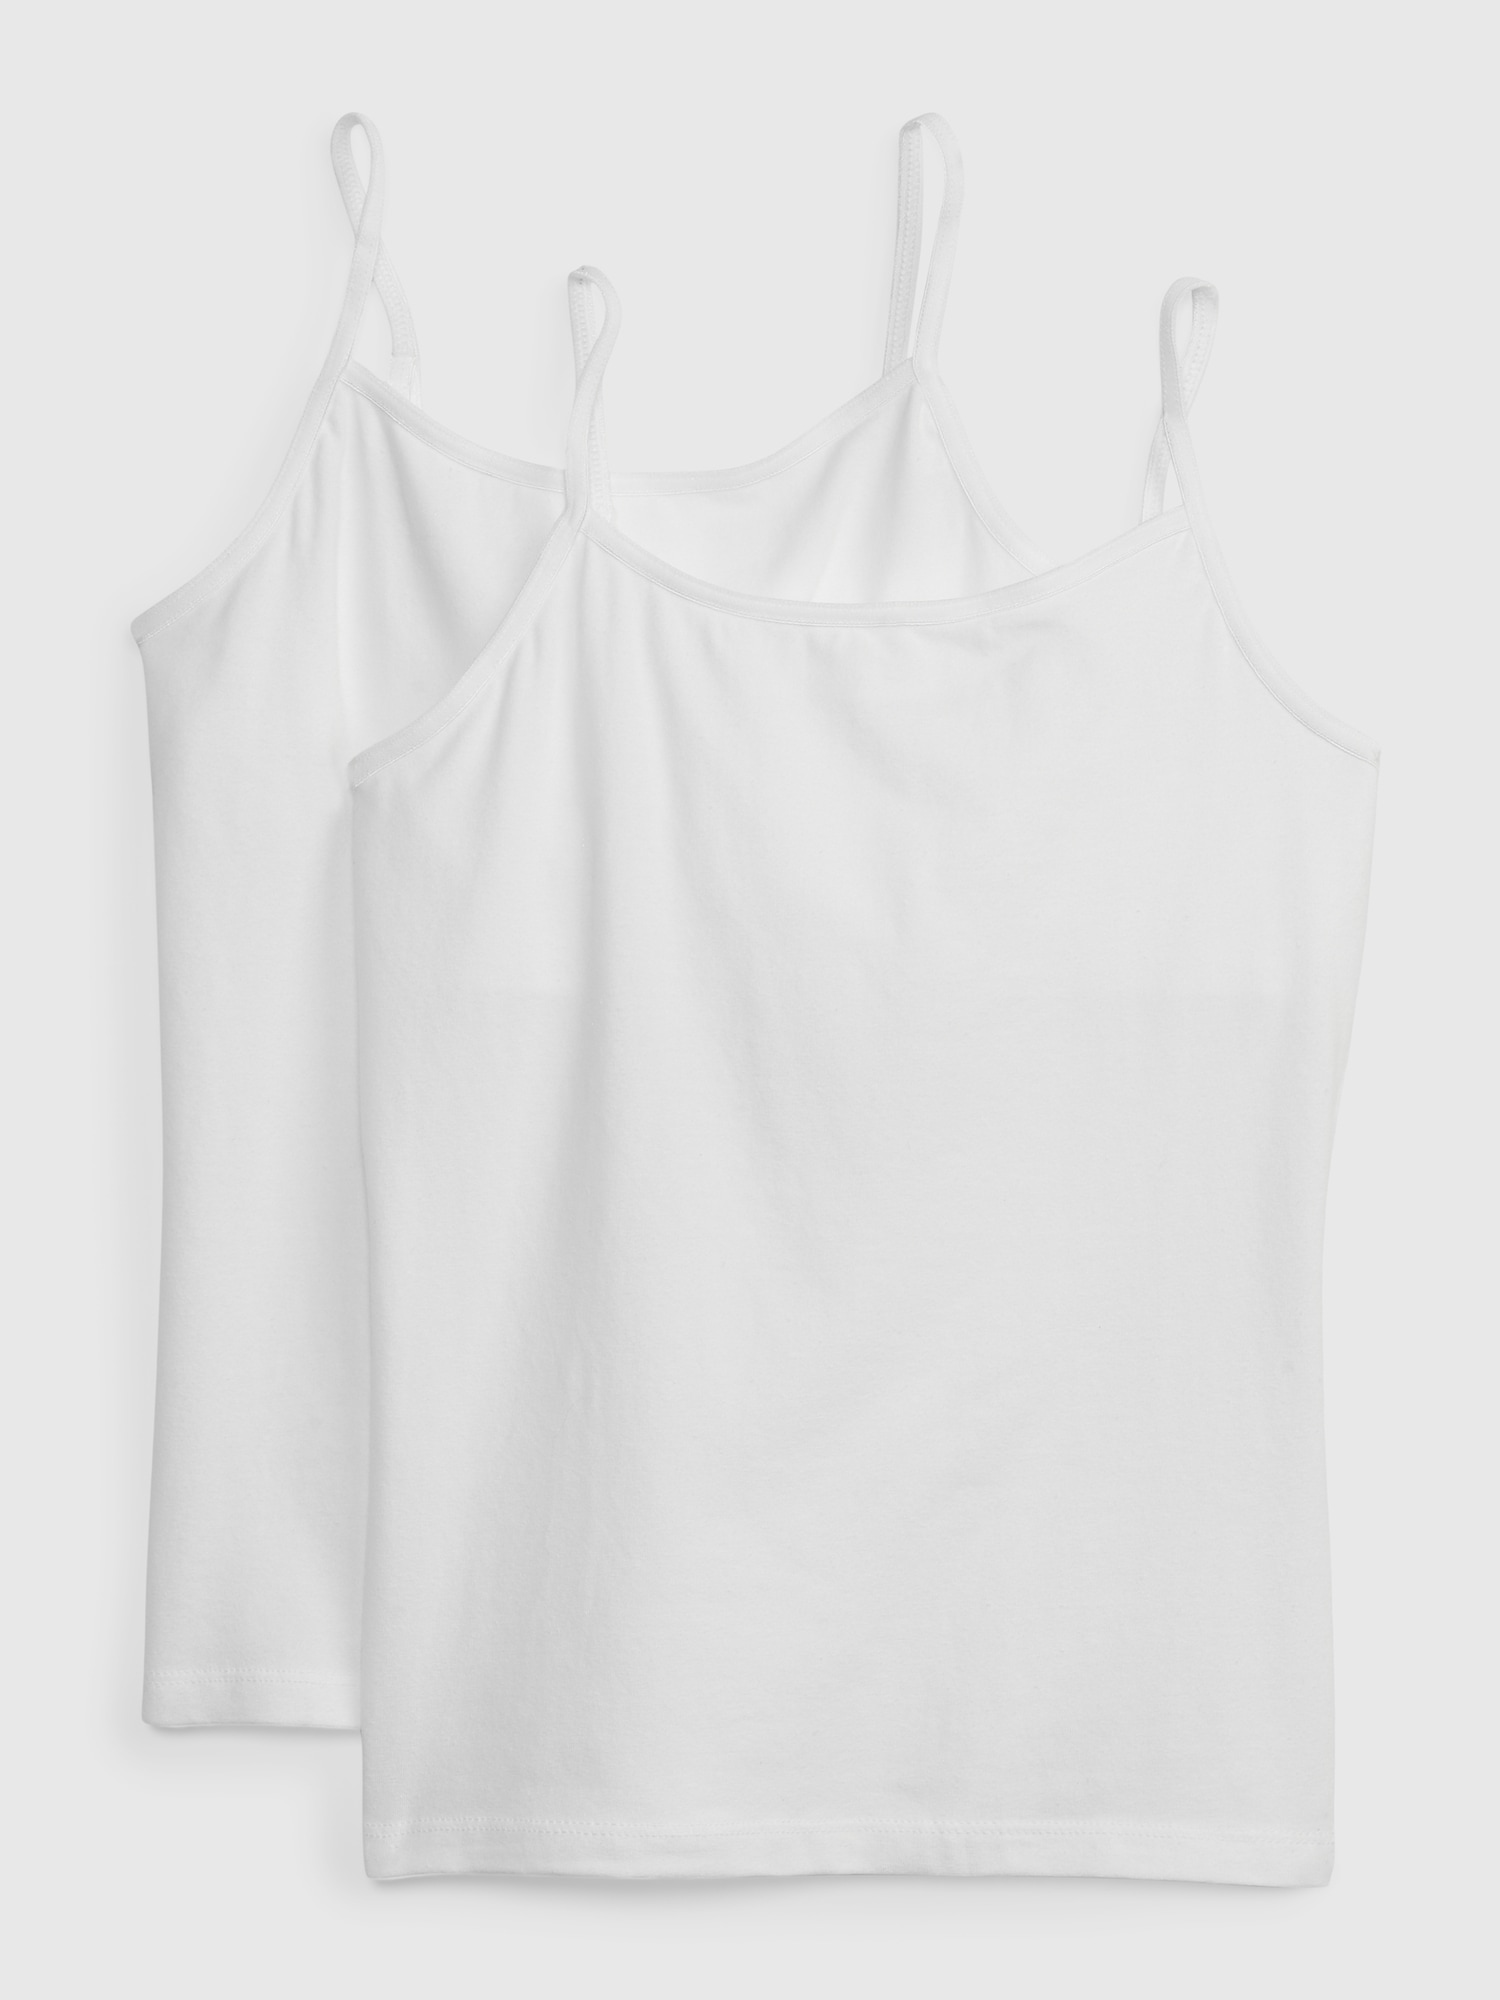 Popular Girl's 4 Pack Soft Cotton Cami Spaghetti Strap Tank Tops Undershirts